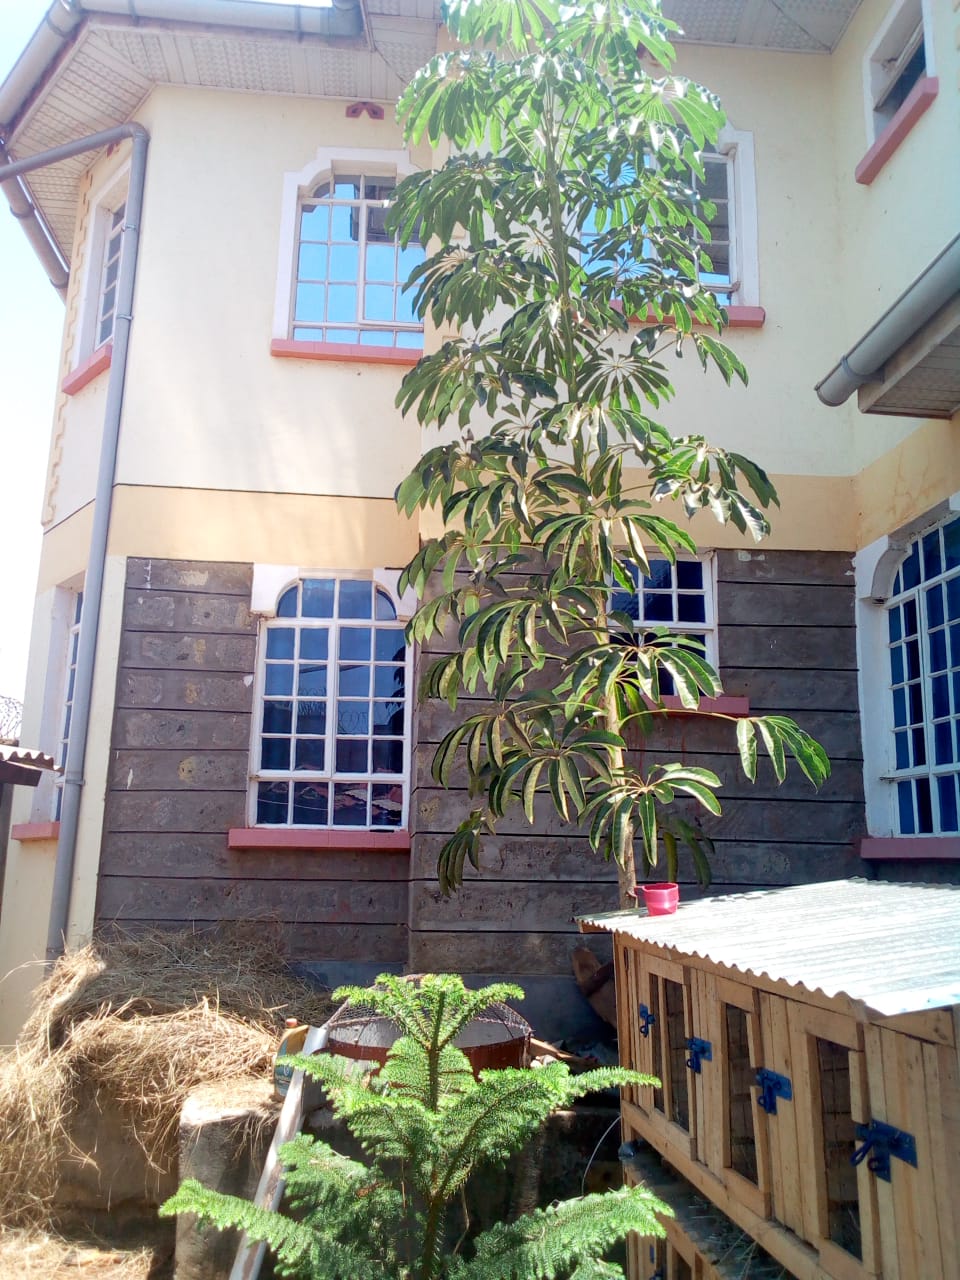 5 Bedroom all ensuite house for sale in Muranga